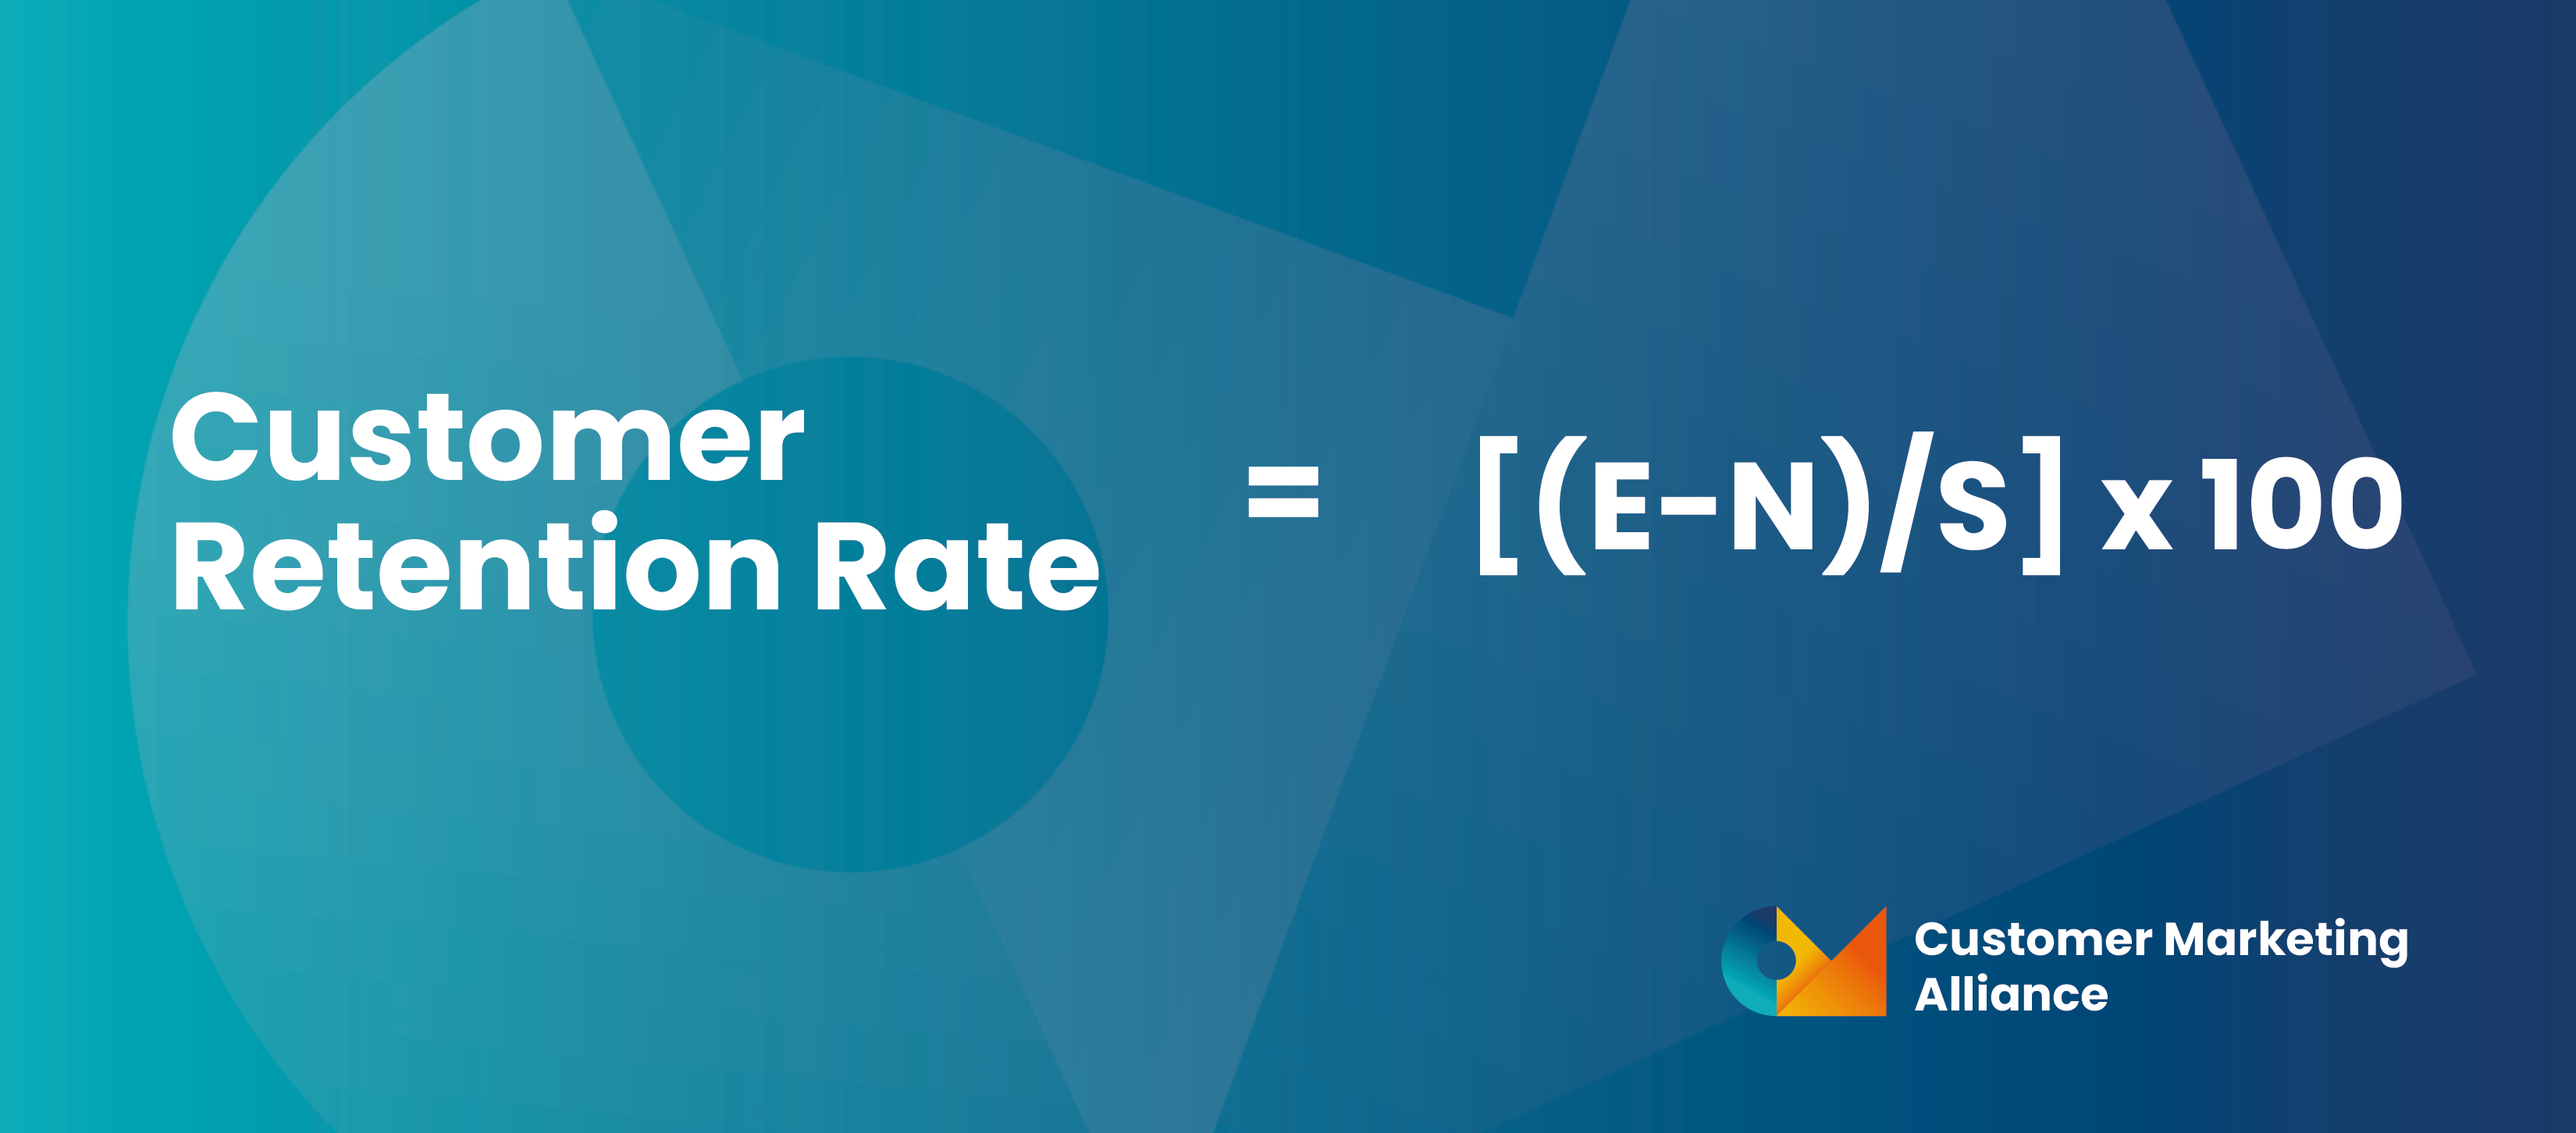 [(E-N)/S] x 100 = Customer Retention Rate